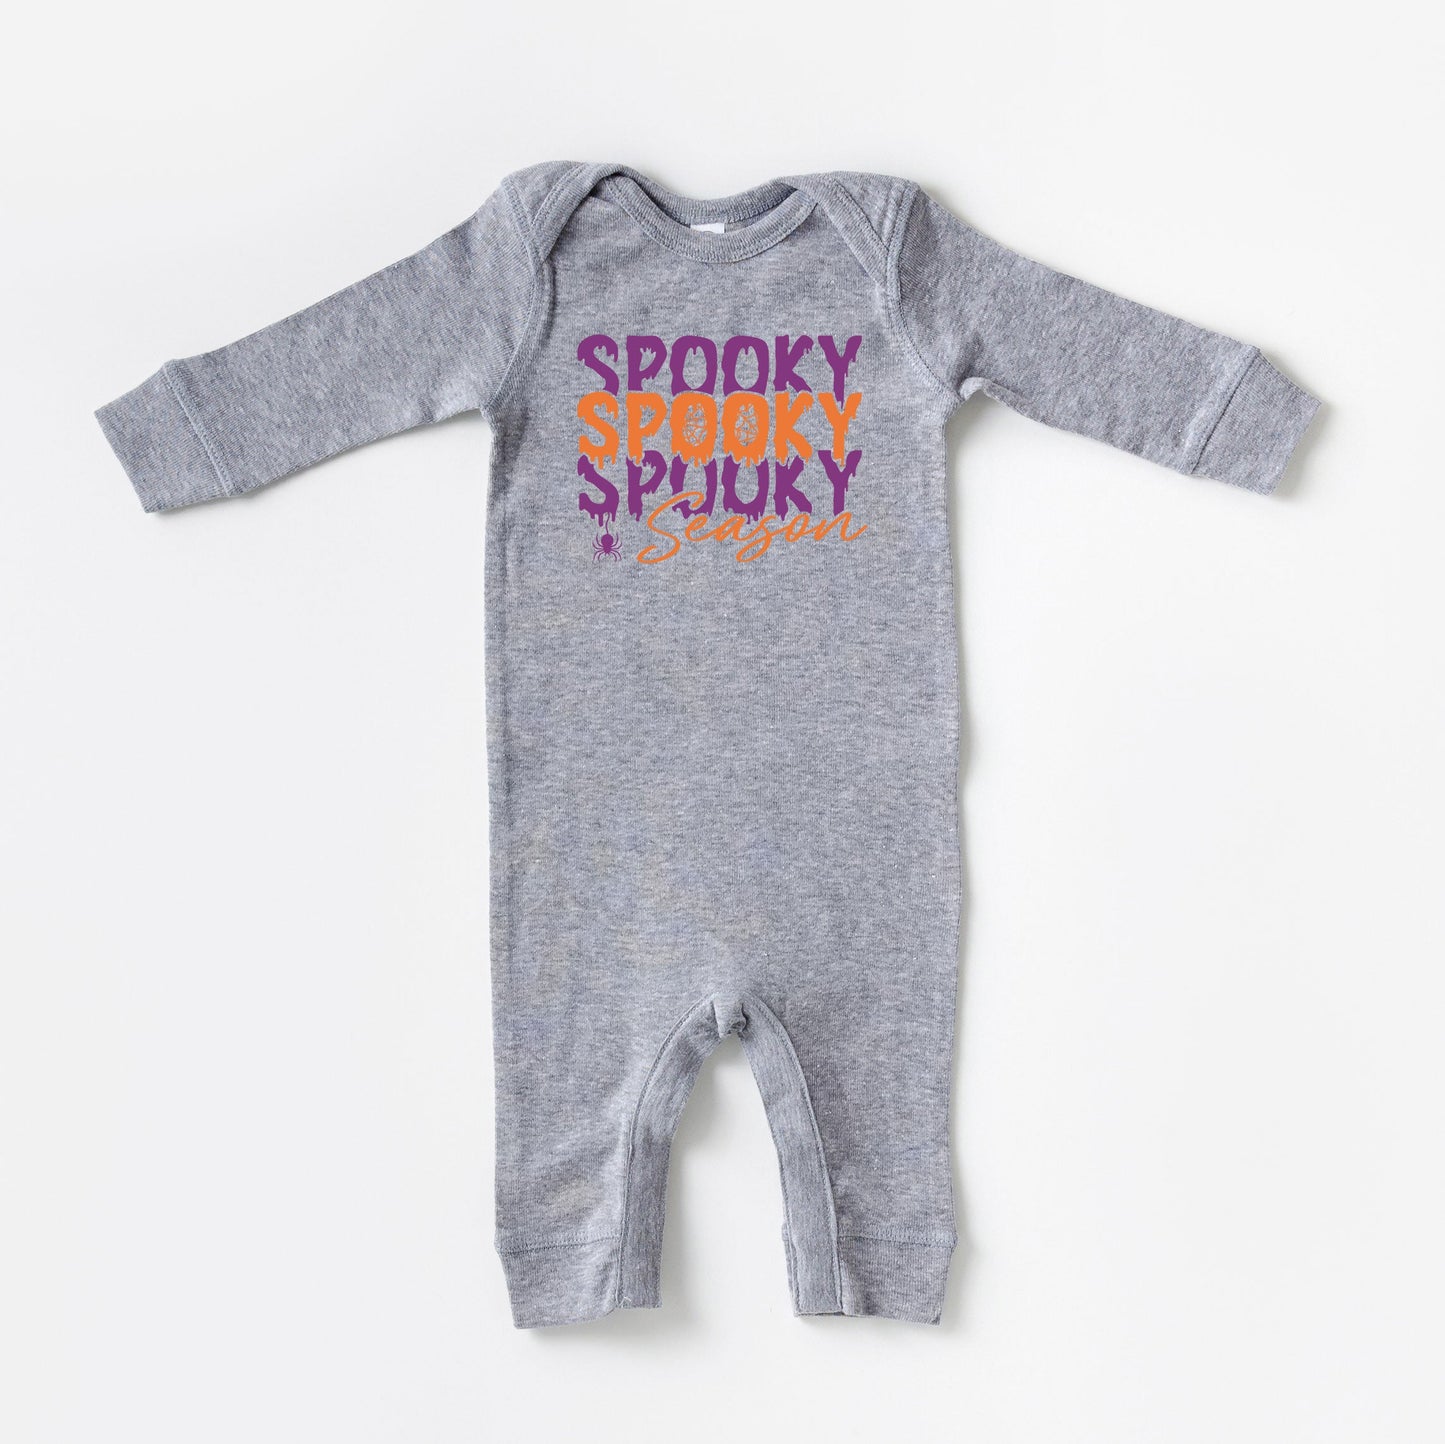 Spooky Season Spider | Baby Graphic Romper